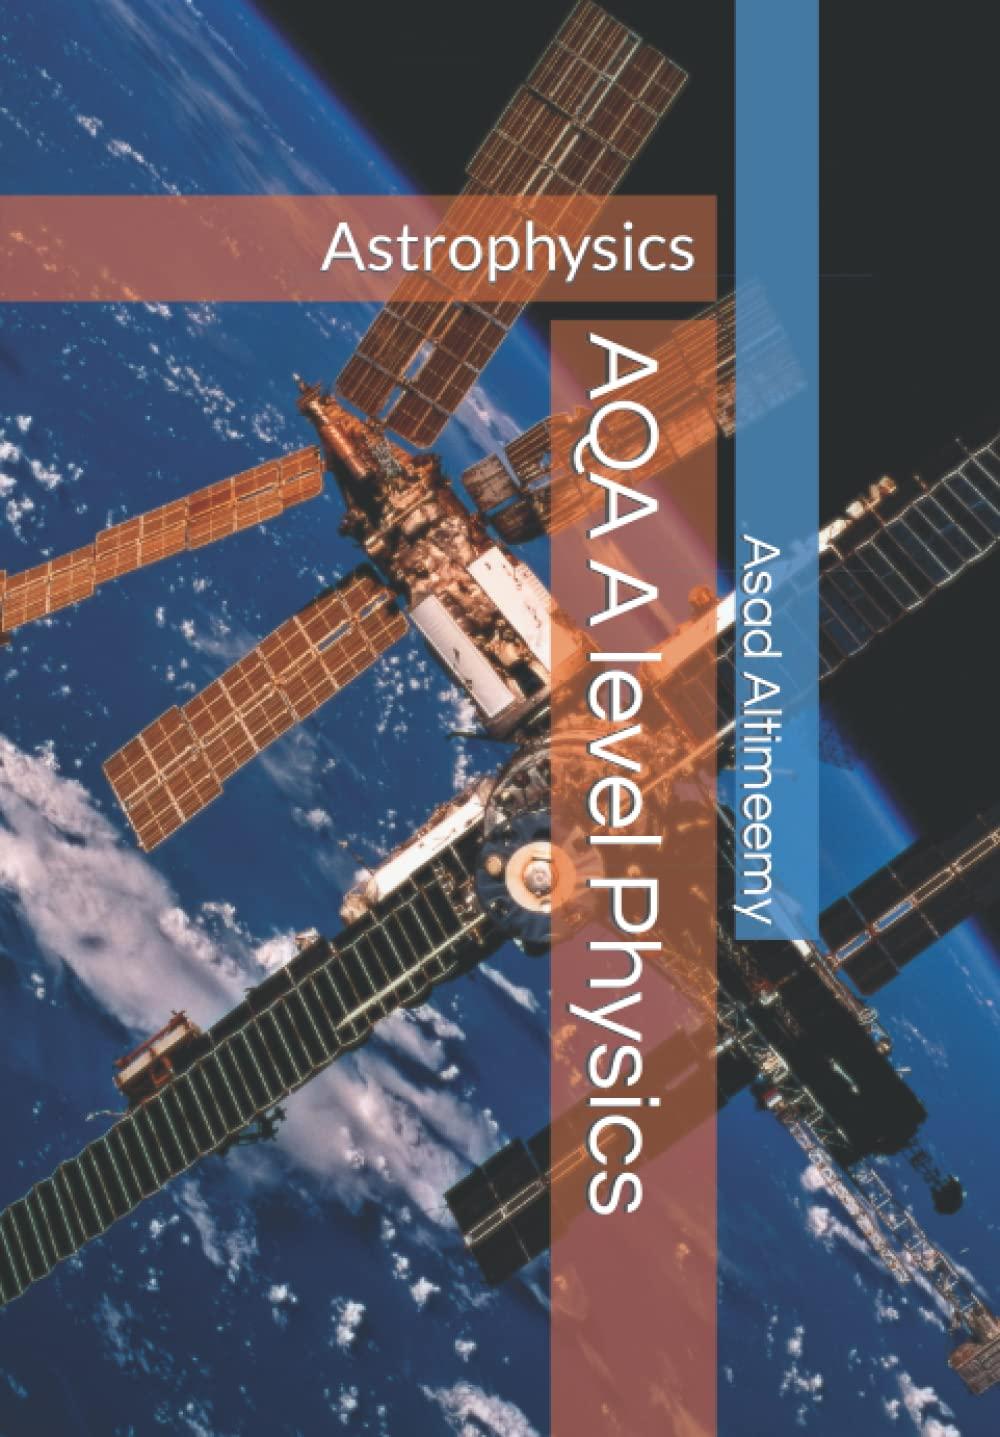 aqa a level physics astrophysics 1st edition asad altimeemy 1706353324, 978-1706353324